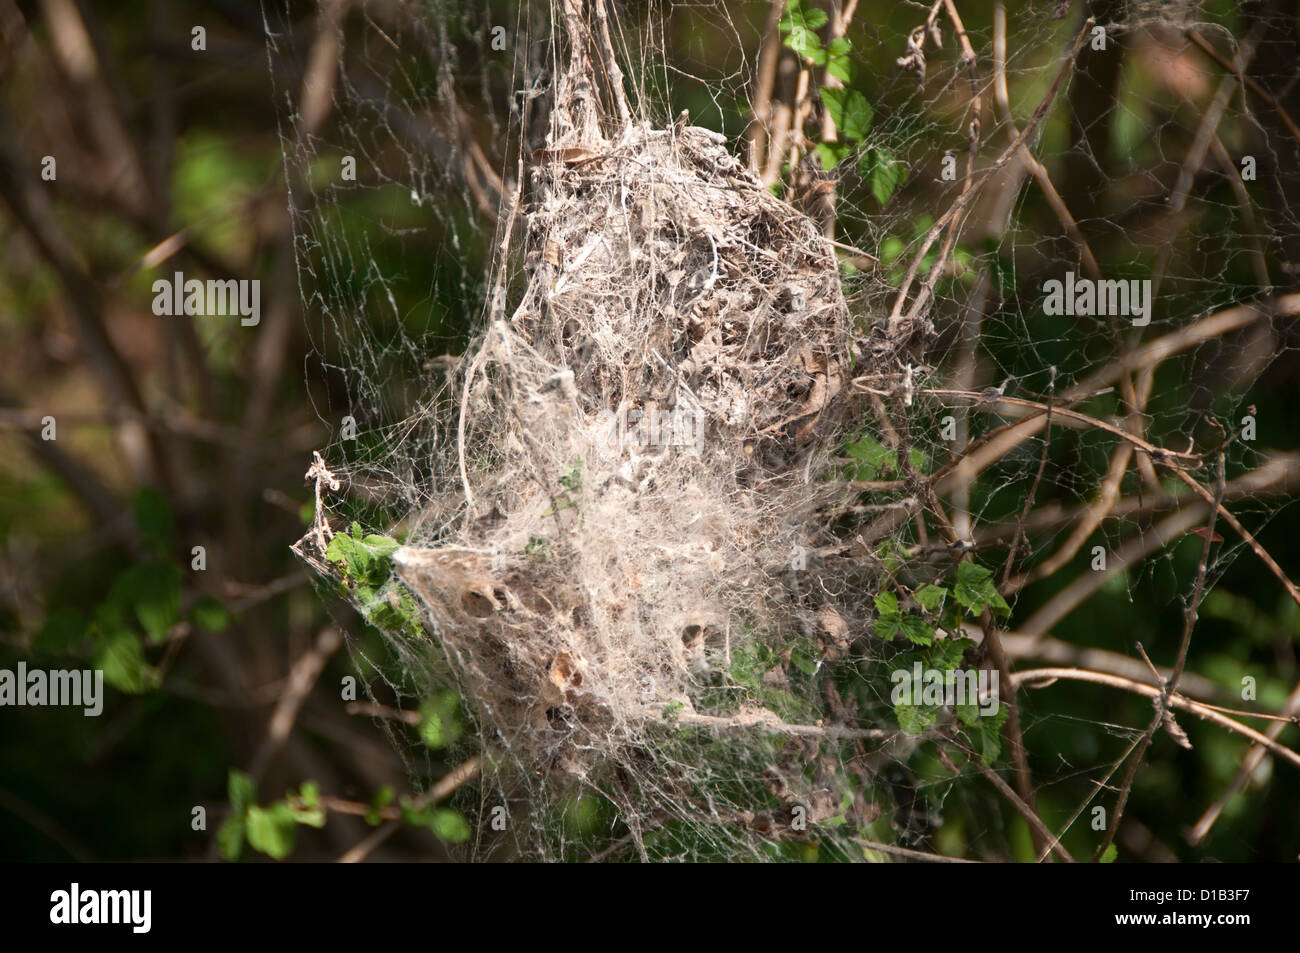 Spider web in Chinnar wildlife sanctuary Stock Photo